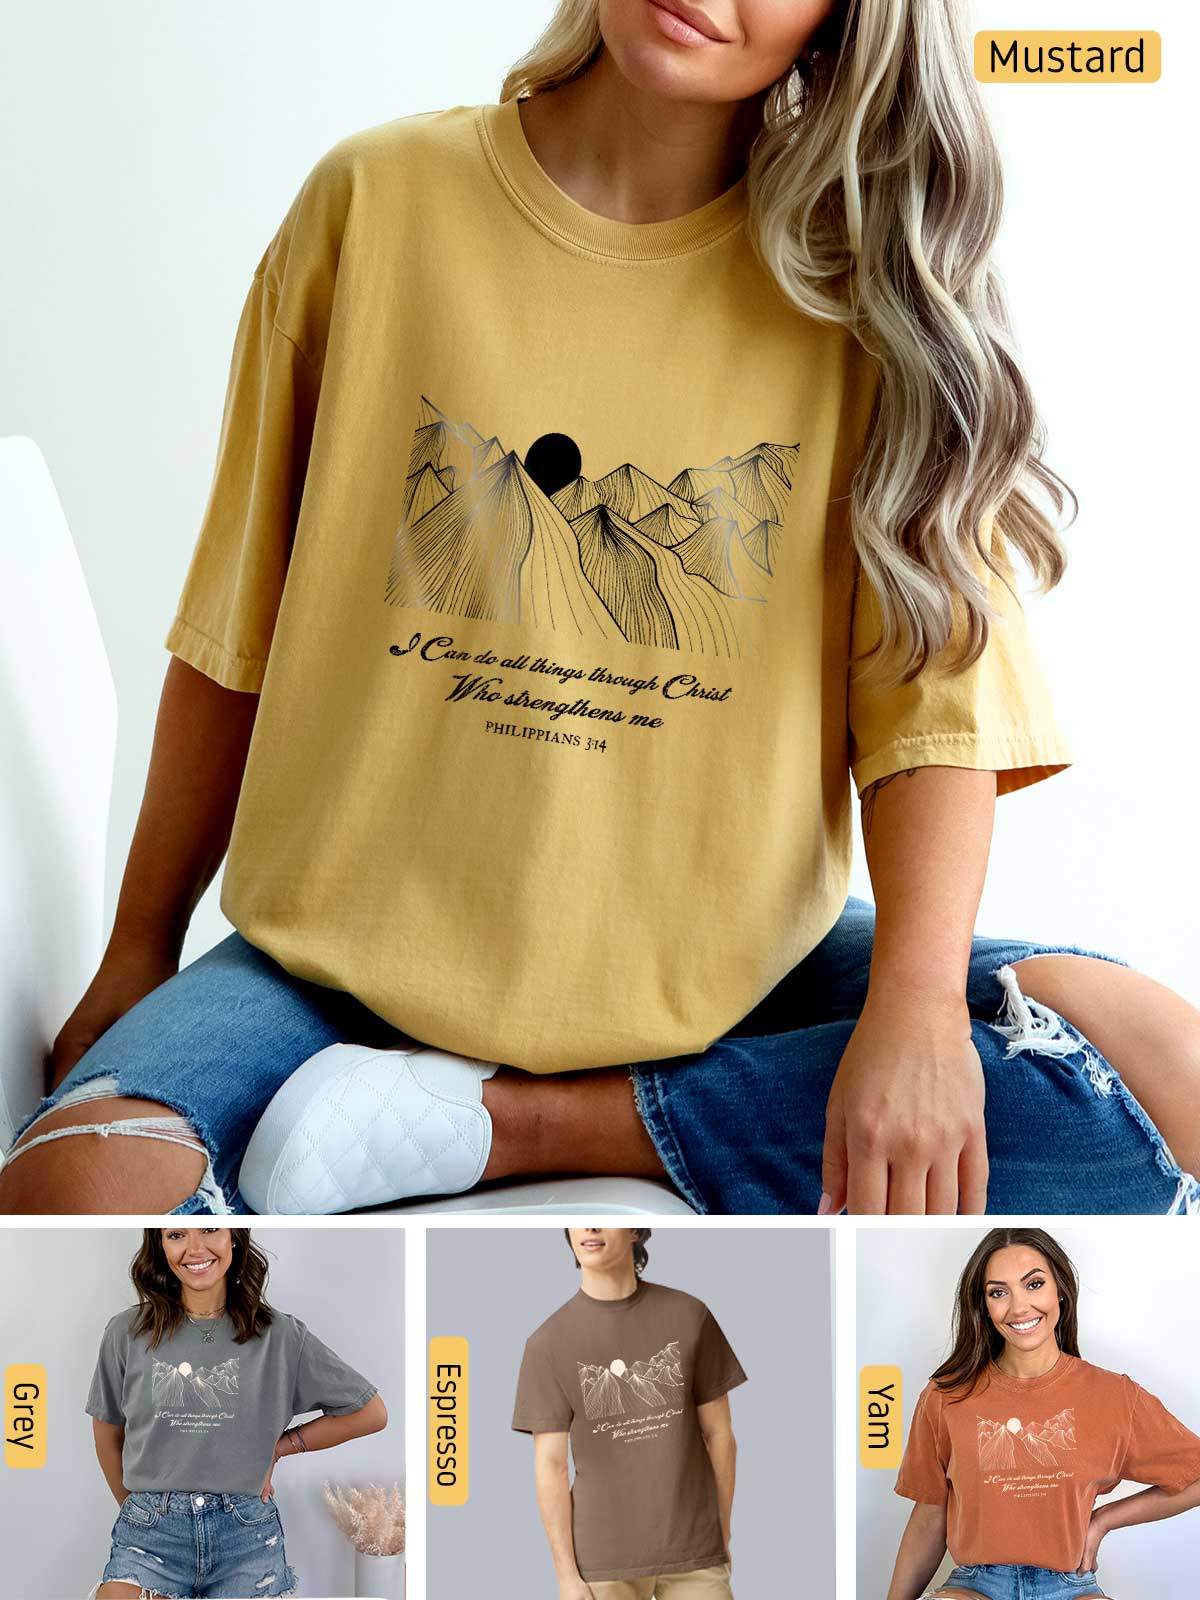 a woman wearing a mustard colored t - shirt